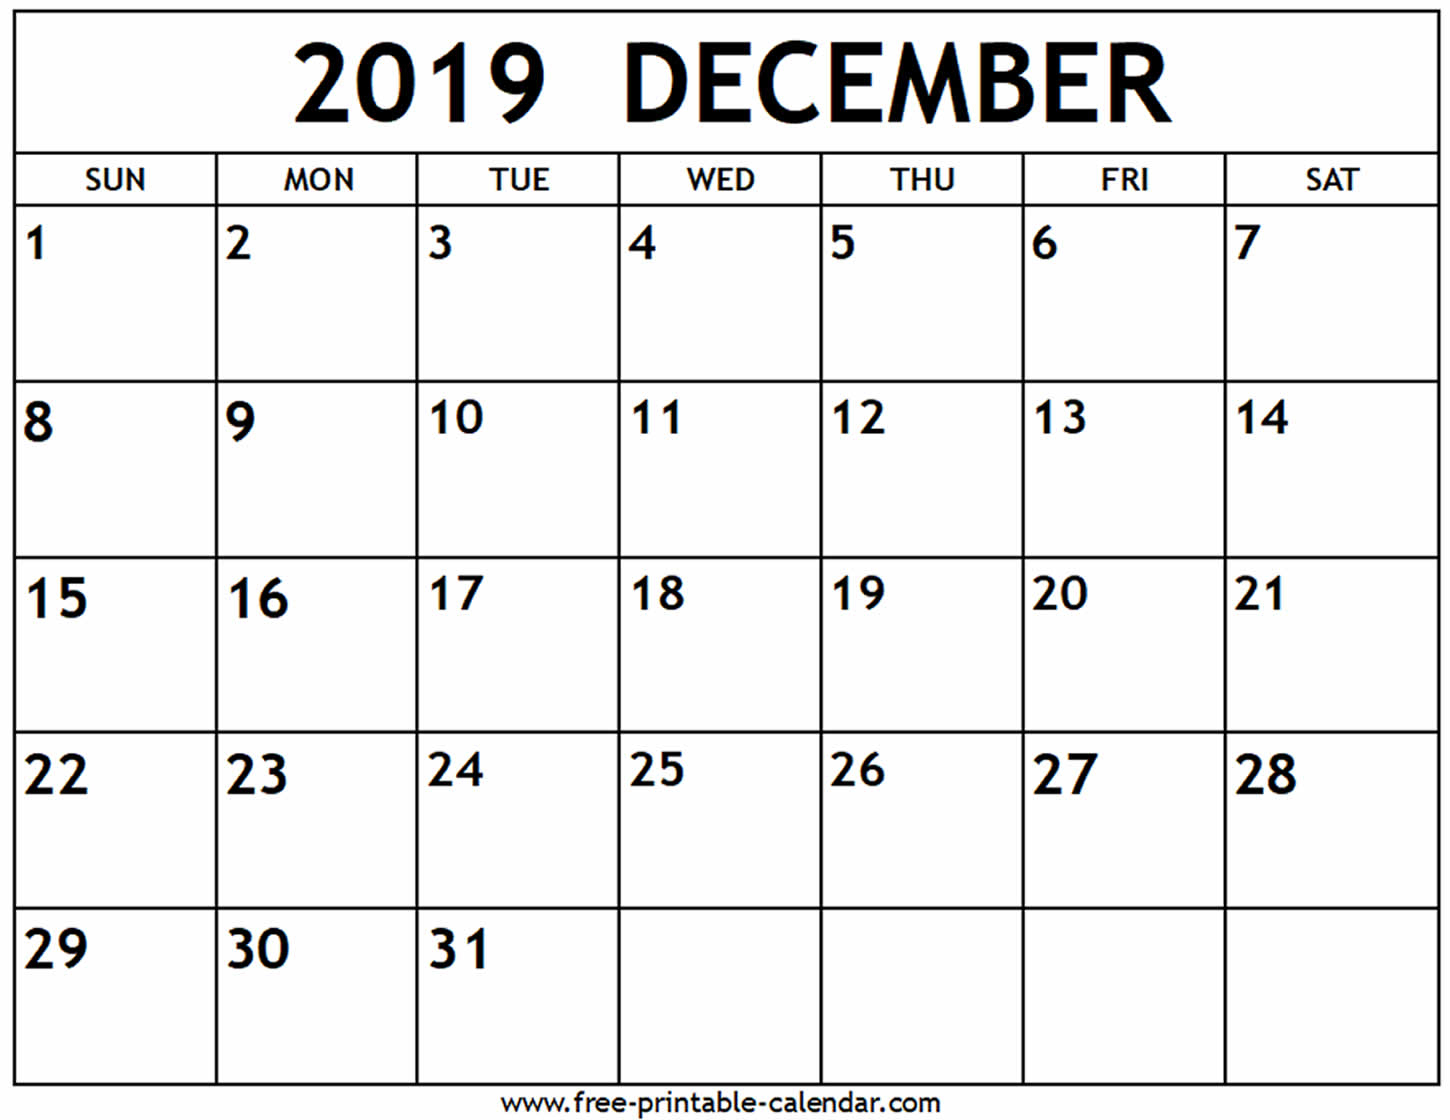 December 2019 Calendar - Free-Printable-Calendar